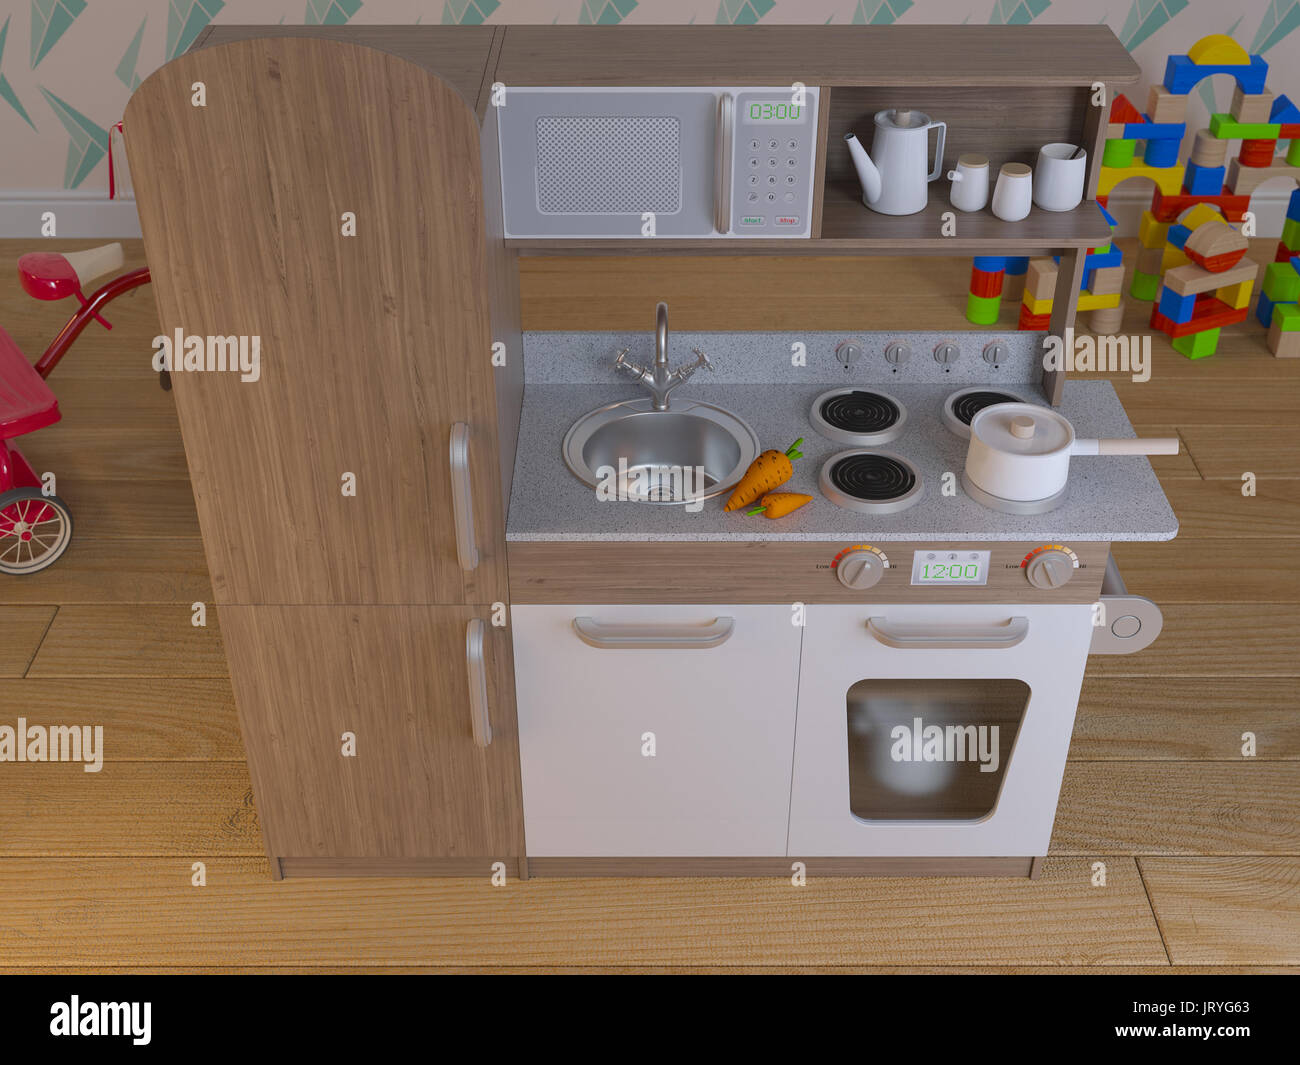 Children kitchen design interior for cooking pretend play set with accessories. 3d illustration kids kitchen smart playset. Render image Stock Photo